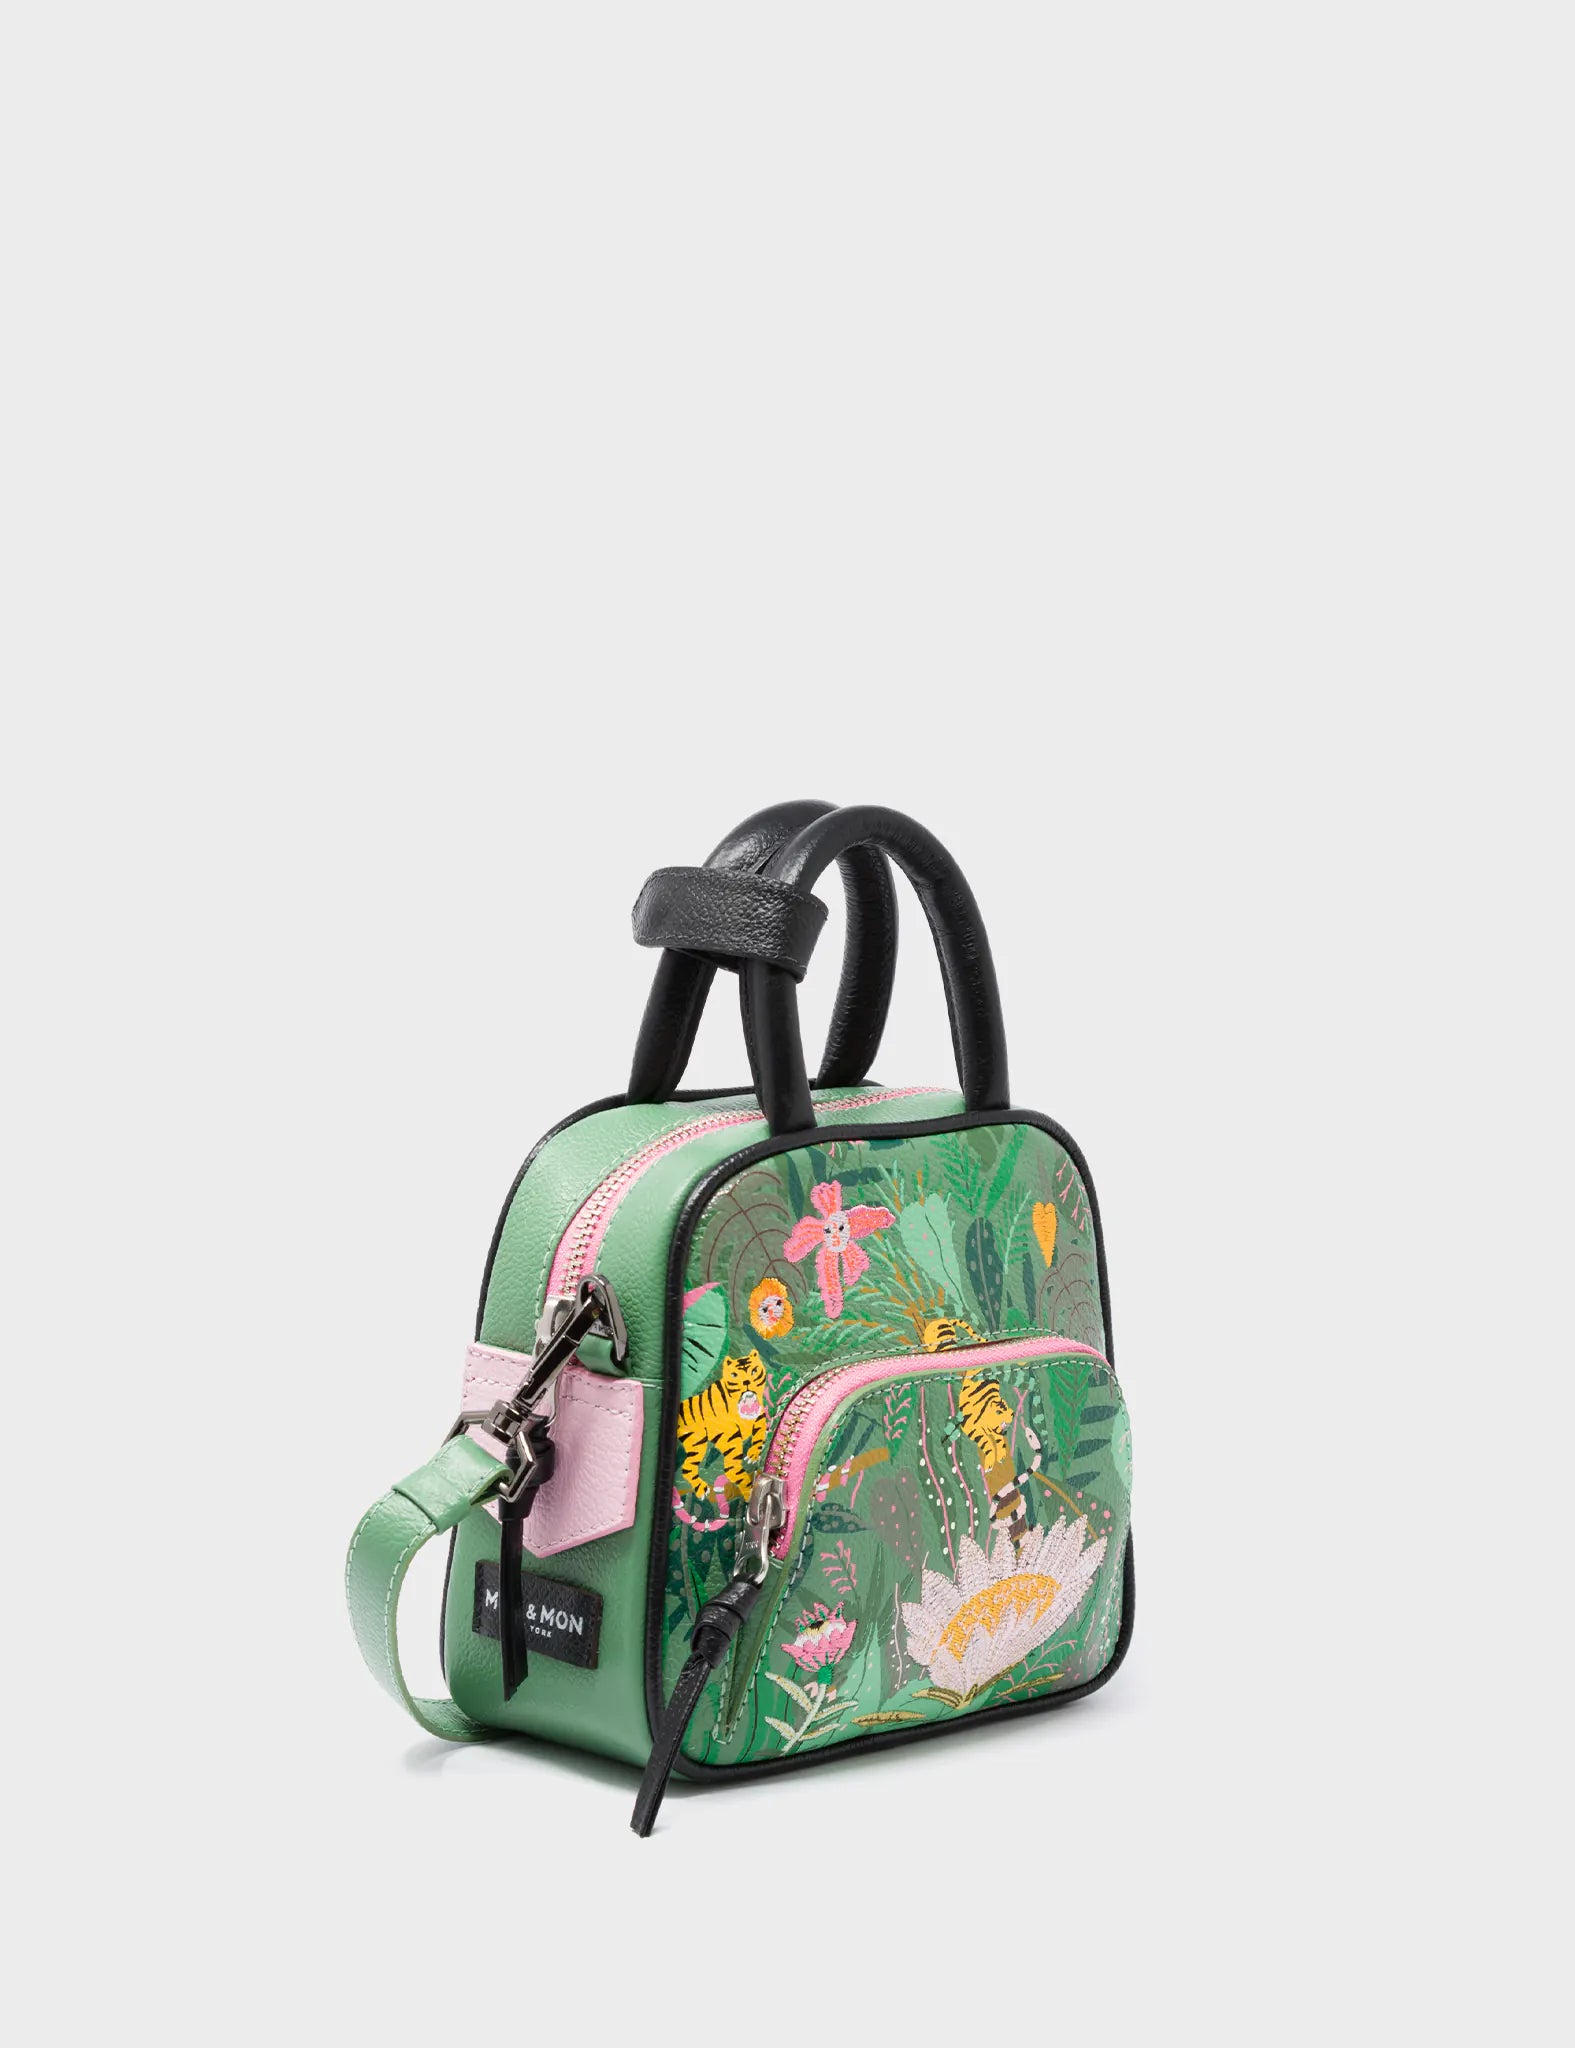 Marino Mini Crossbody Green Leather Bag - El Tropico Print & Embroidery Design